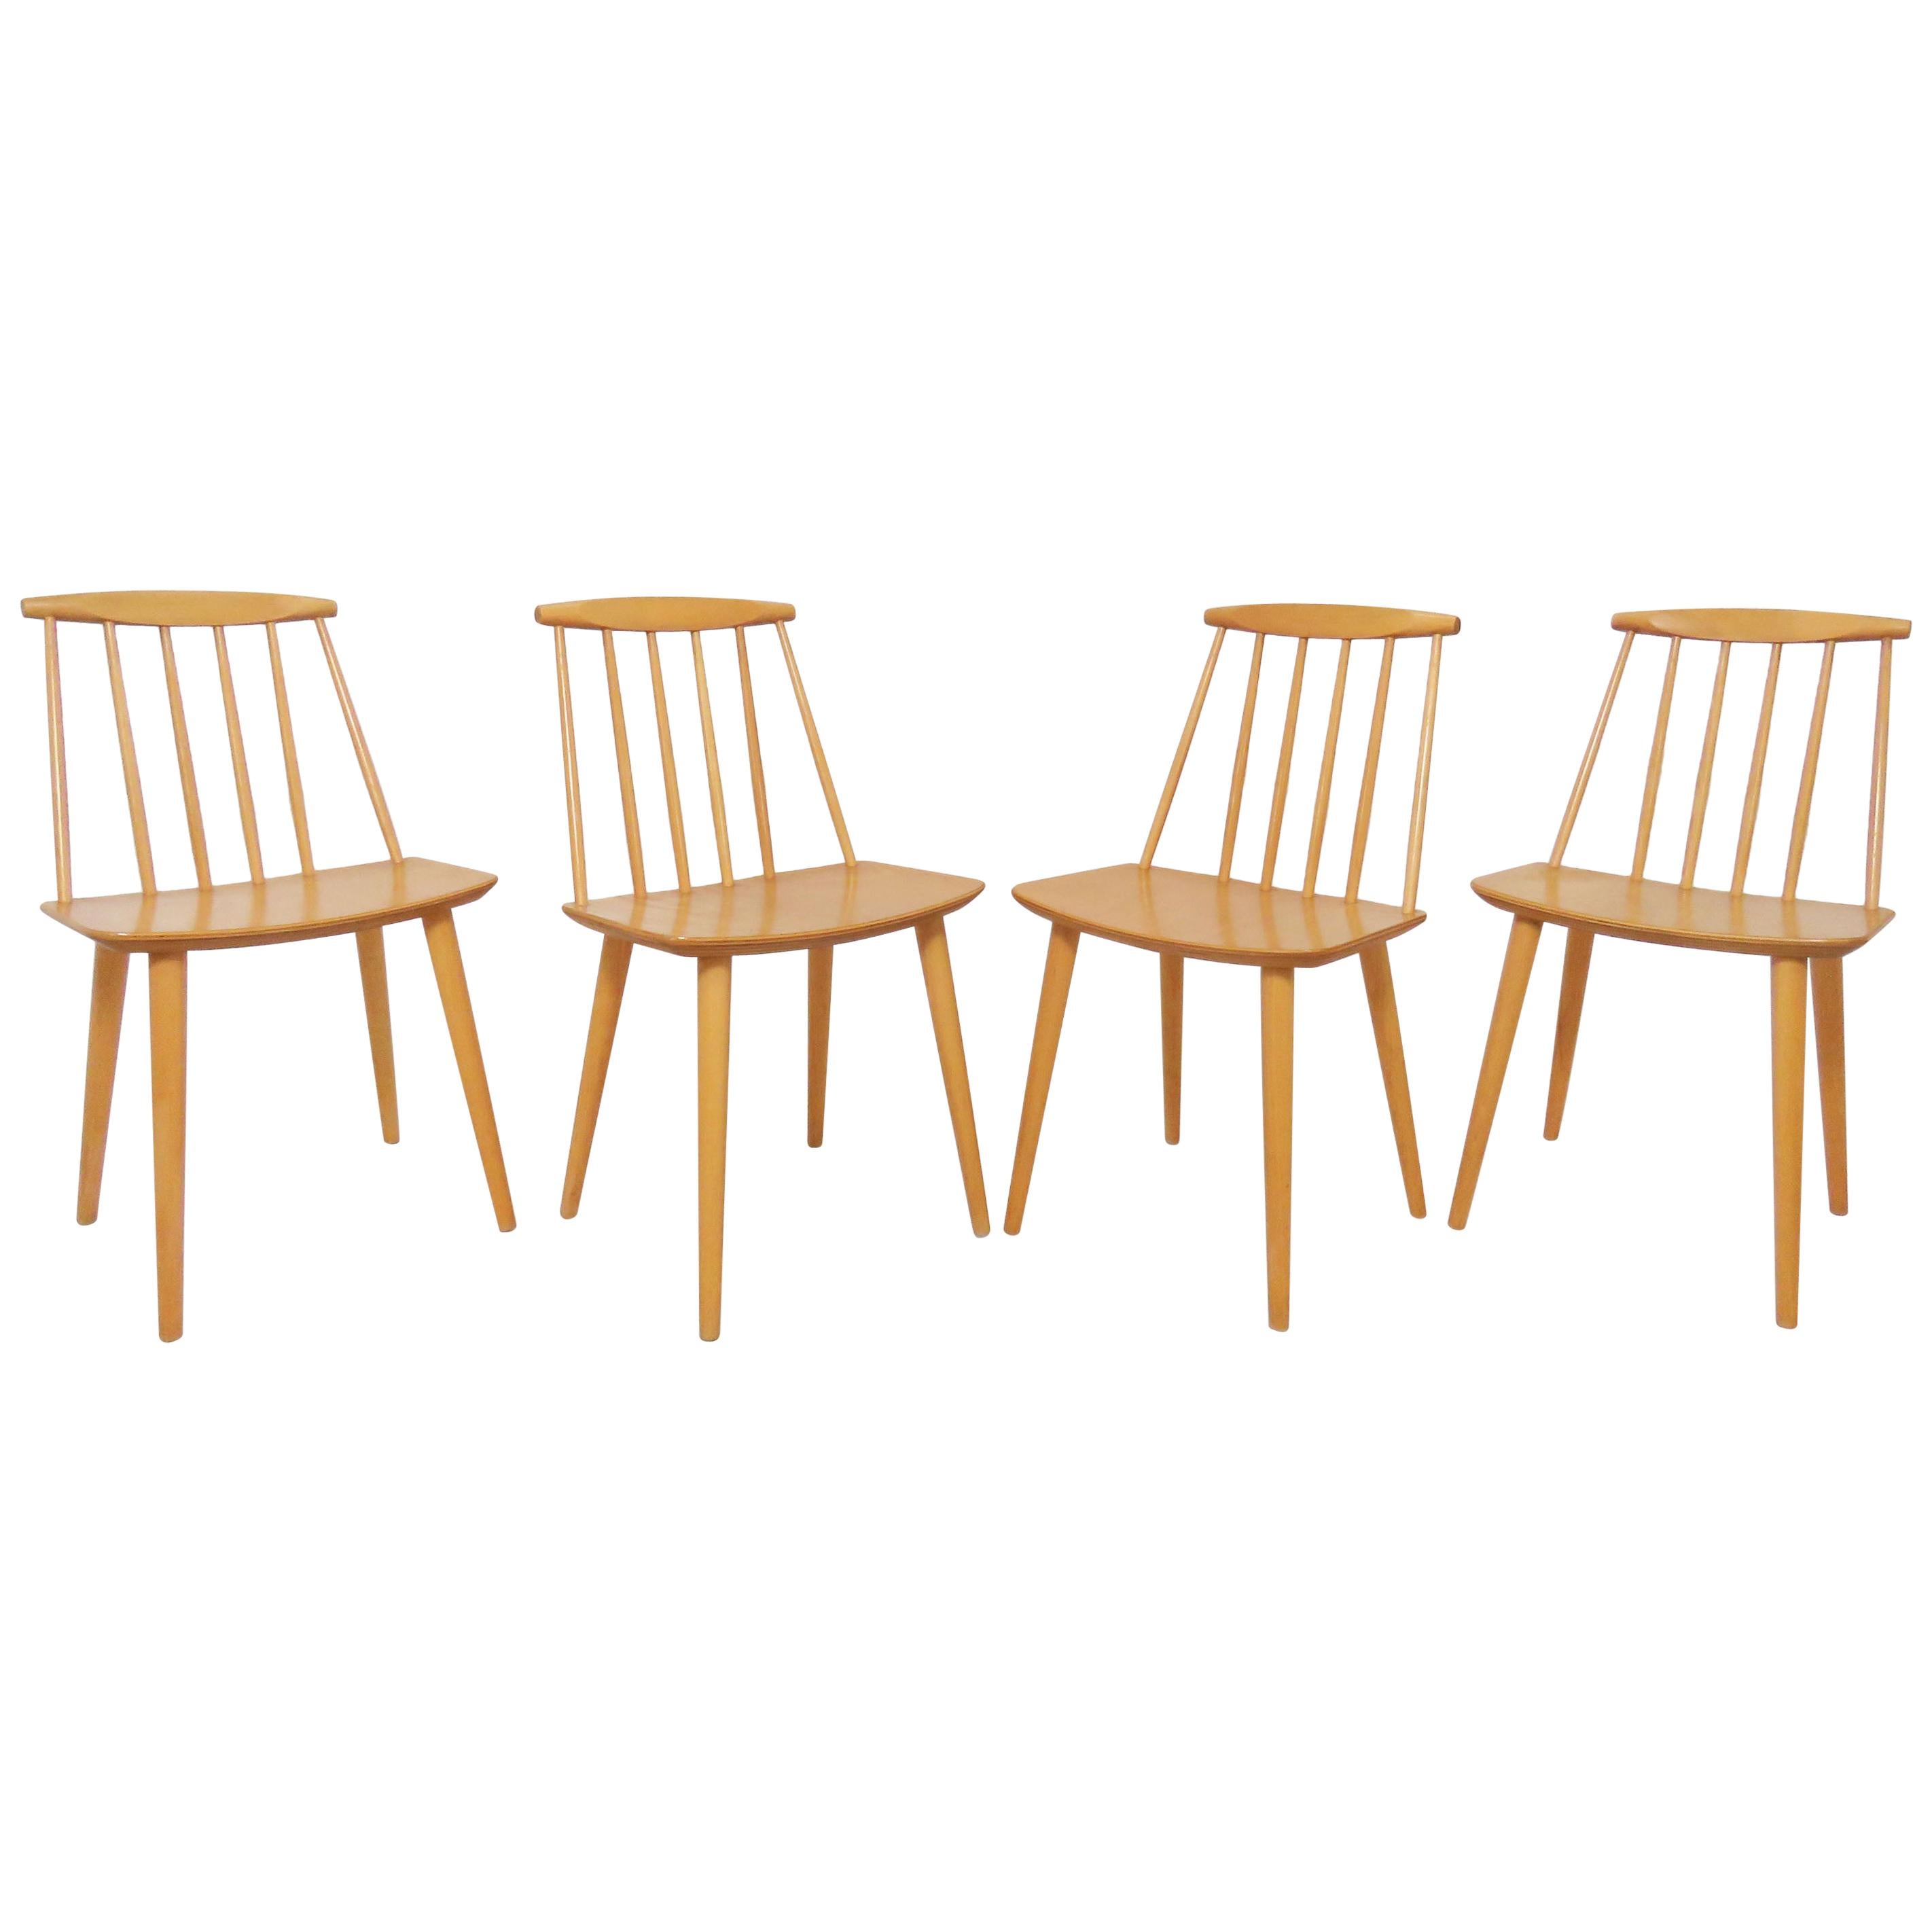 Set of Four Folke Palsson for Fdb Mobler, Denmark Dining Chairs, circa 1975